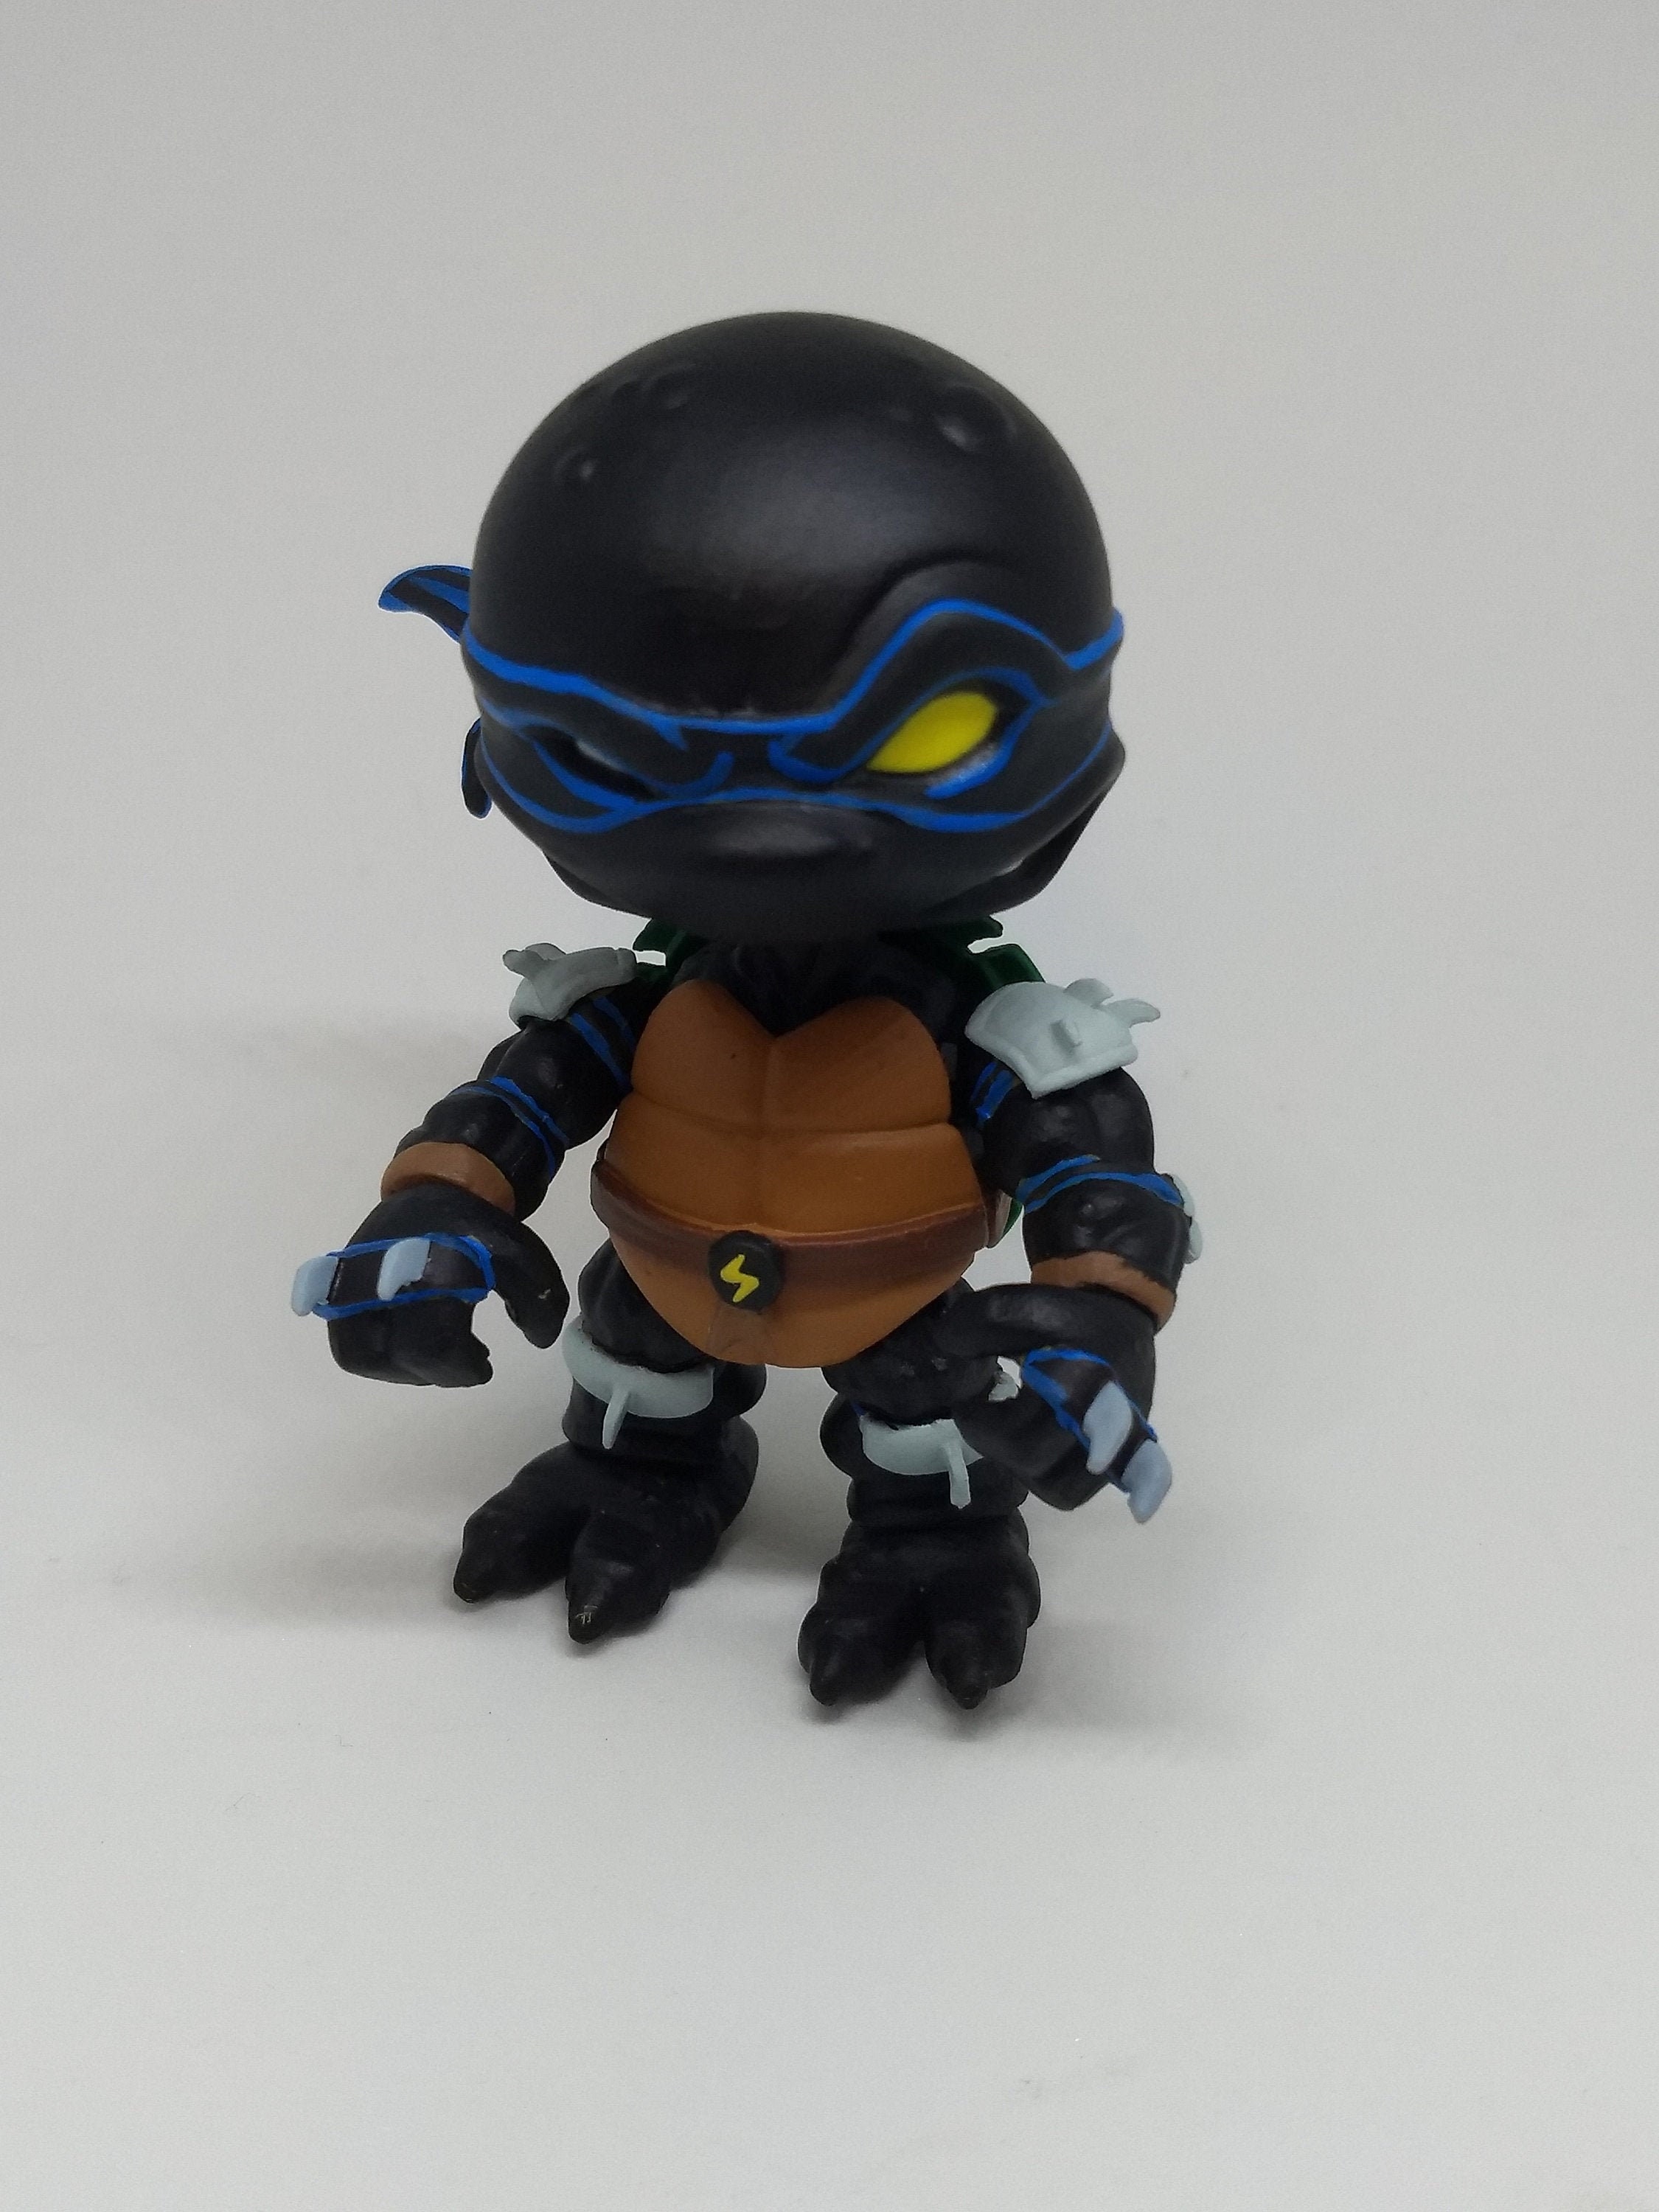 The Loyal Subjects Teenage Mutant Ninja Turtles Donatello CheeBee